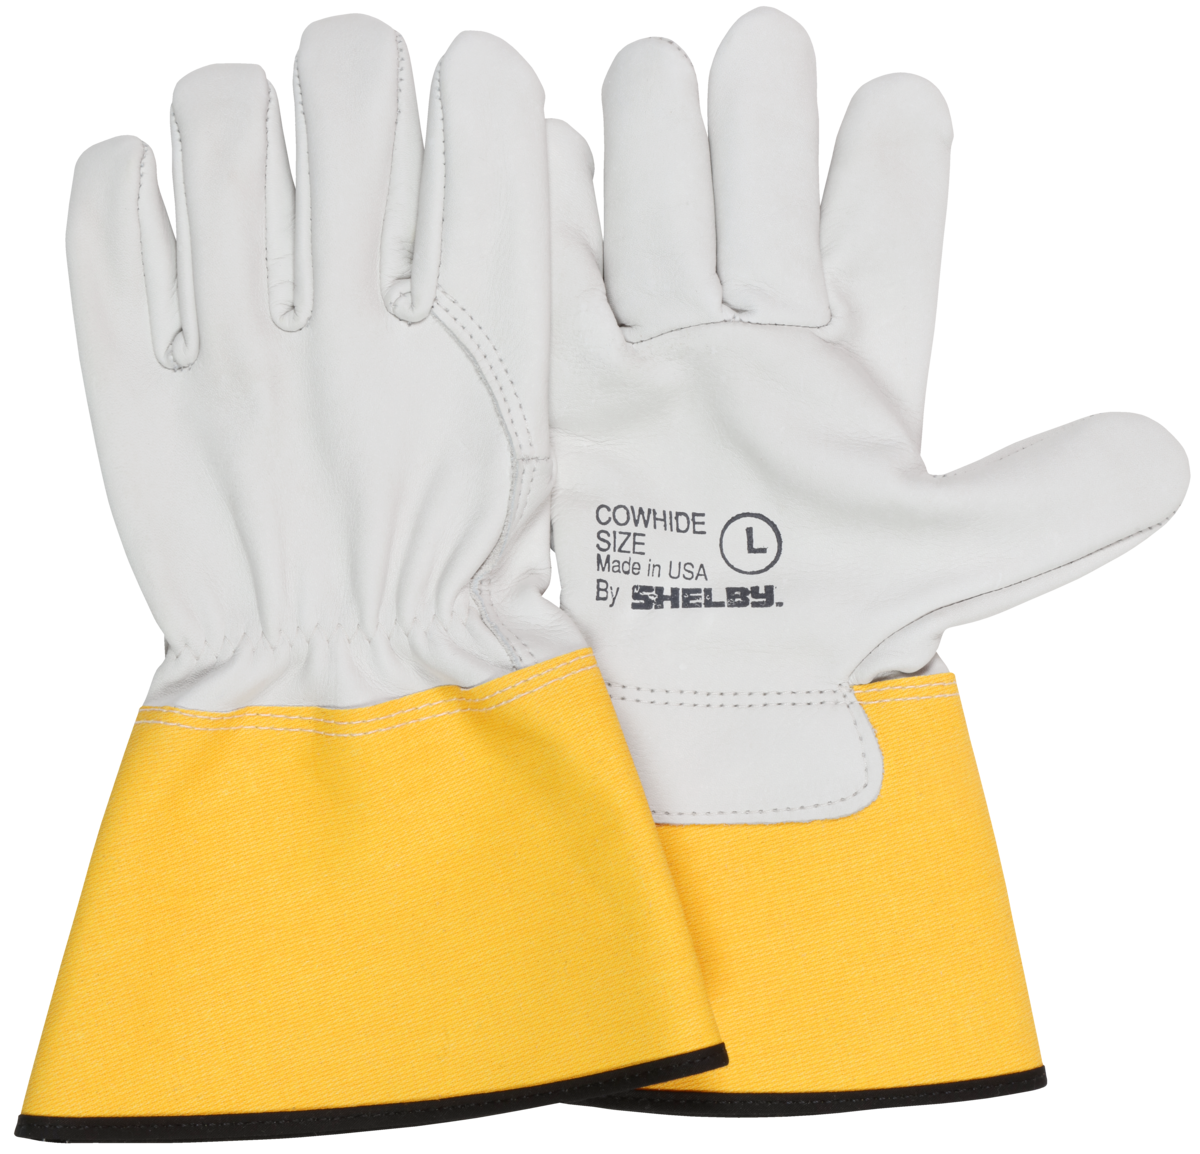 5375 - Lineman's Glove